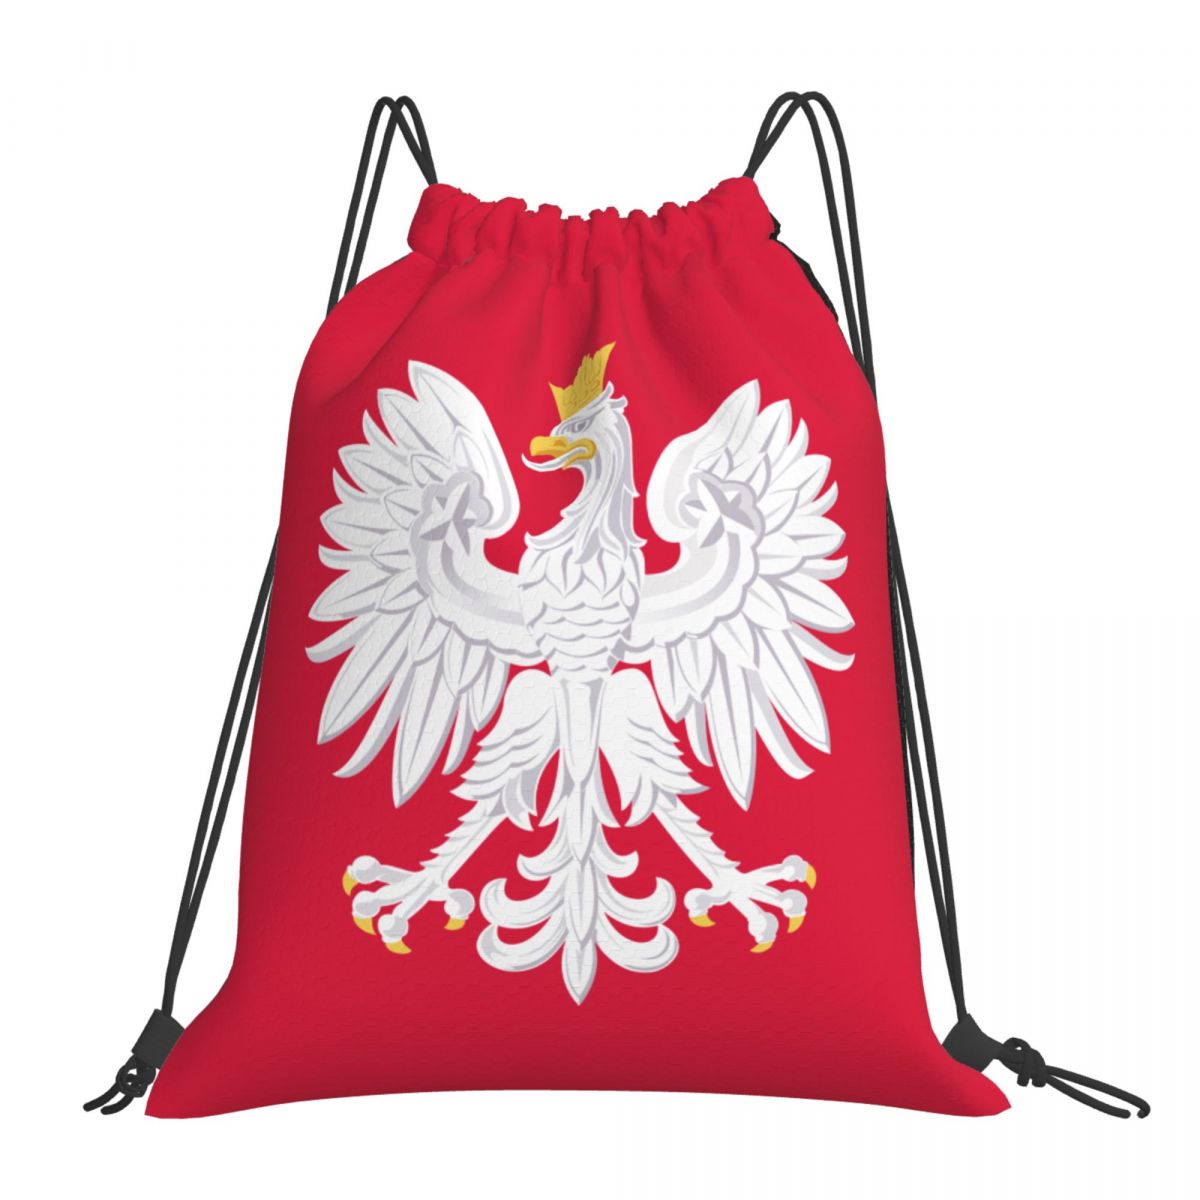 Poland National Football Team Unisex Drawstring Backpack Bag Travel Sackpack